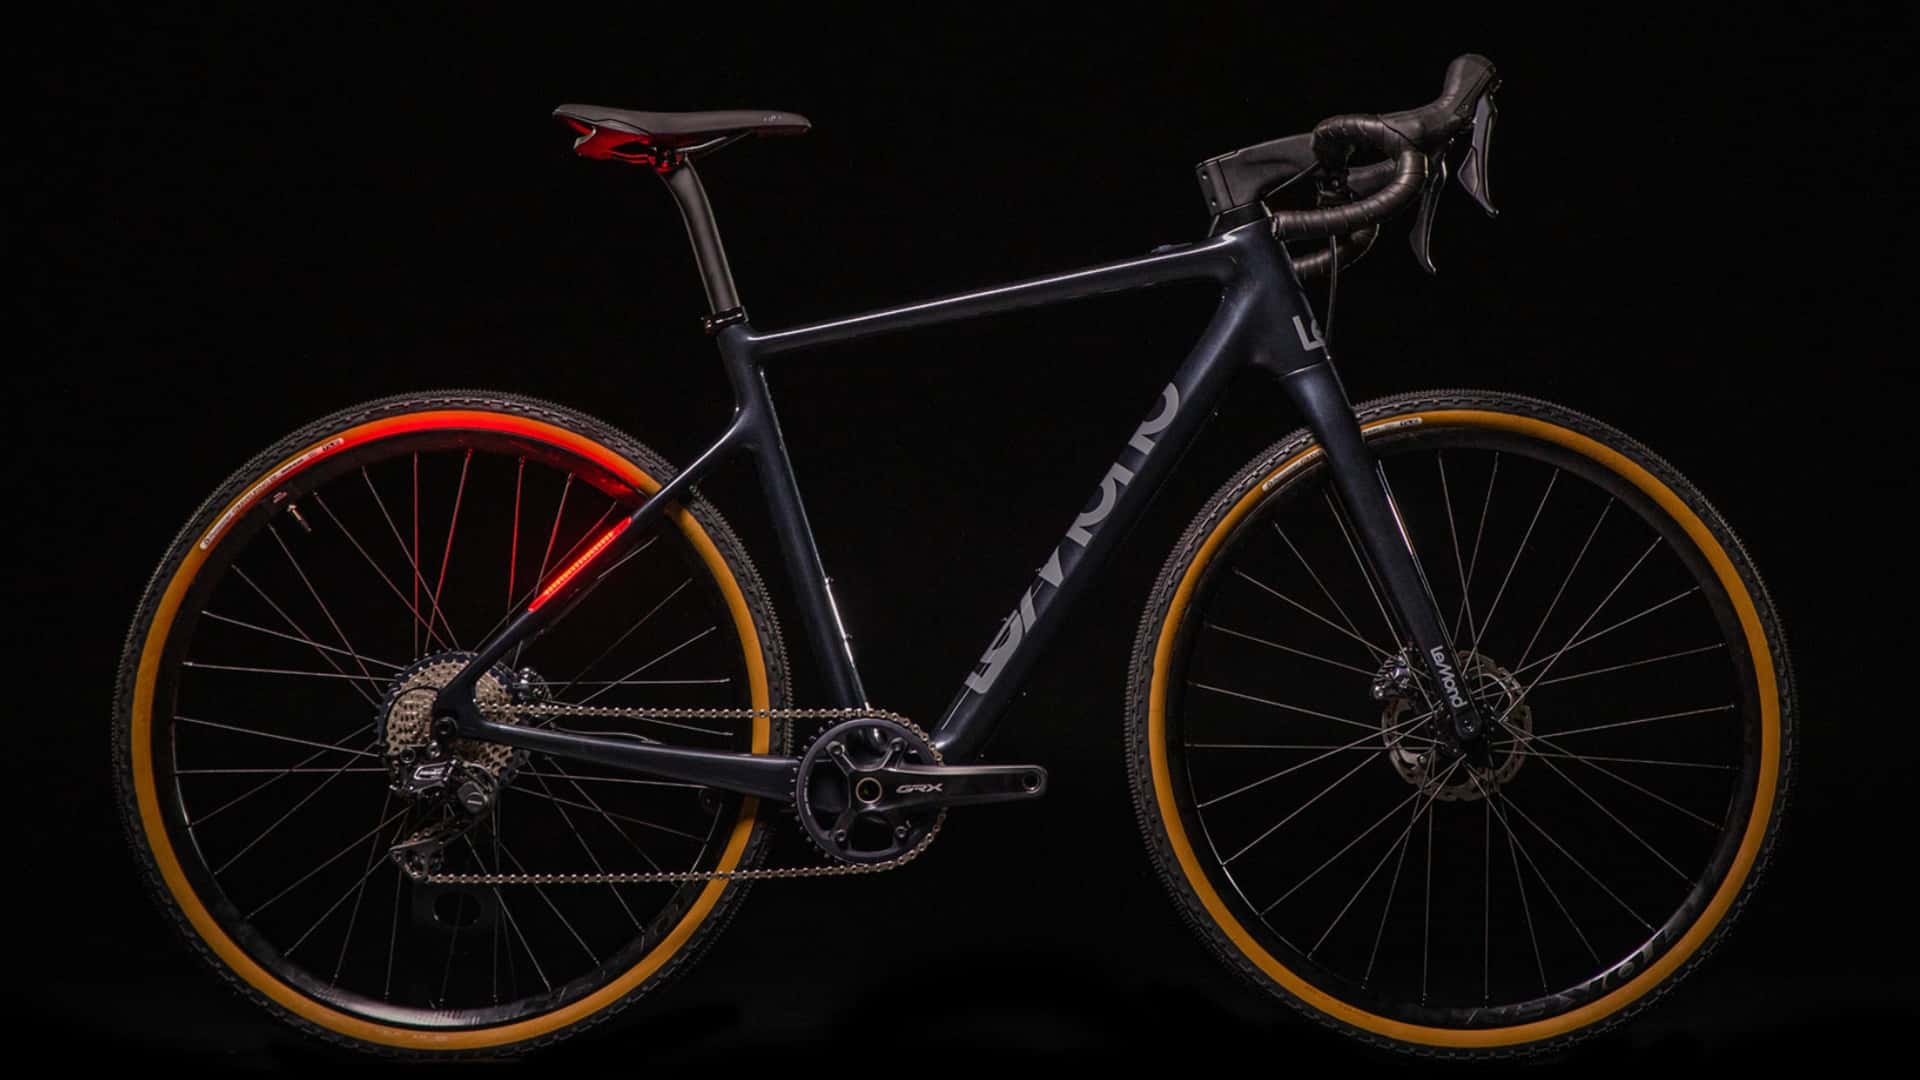 lemond unveils performance-oriented all-road prolog e-bike